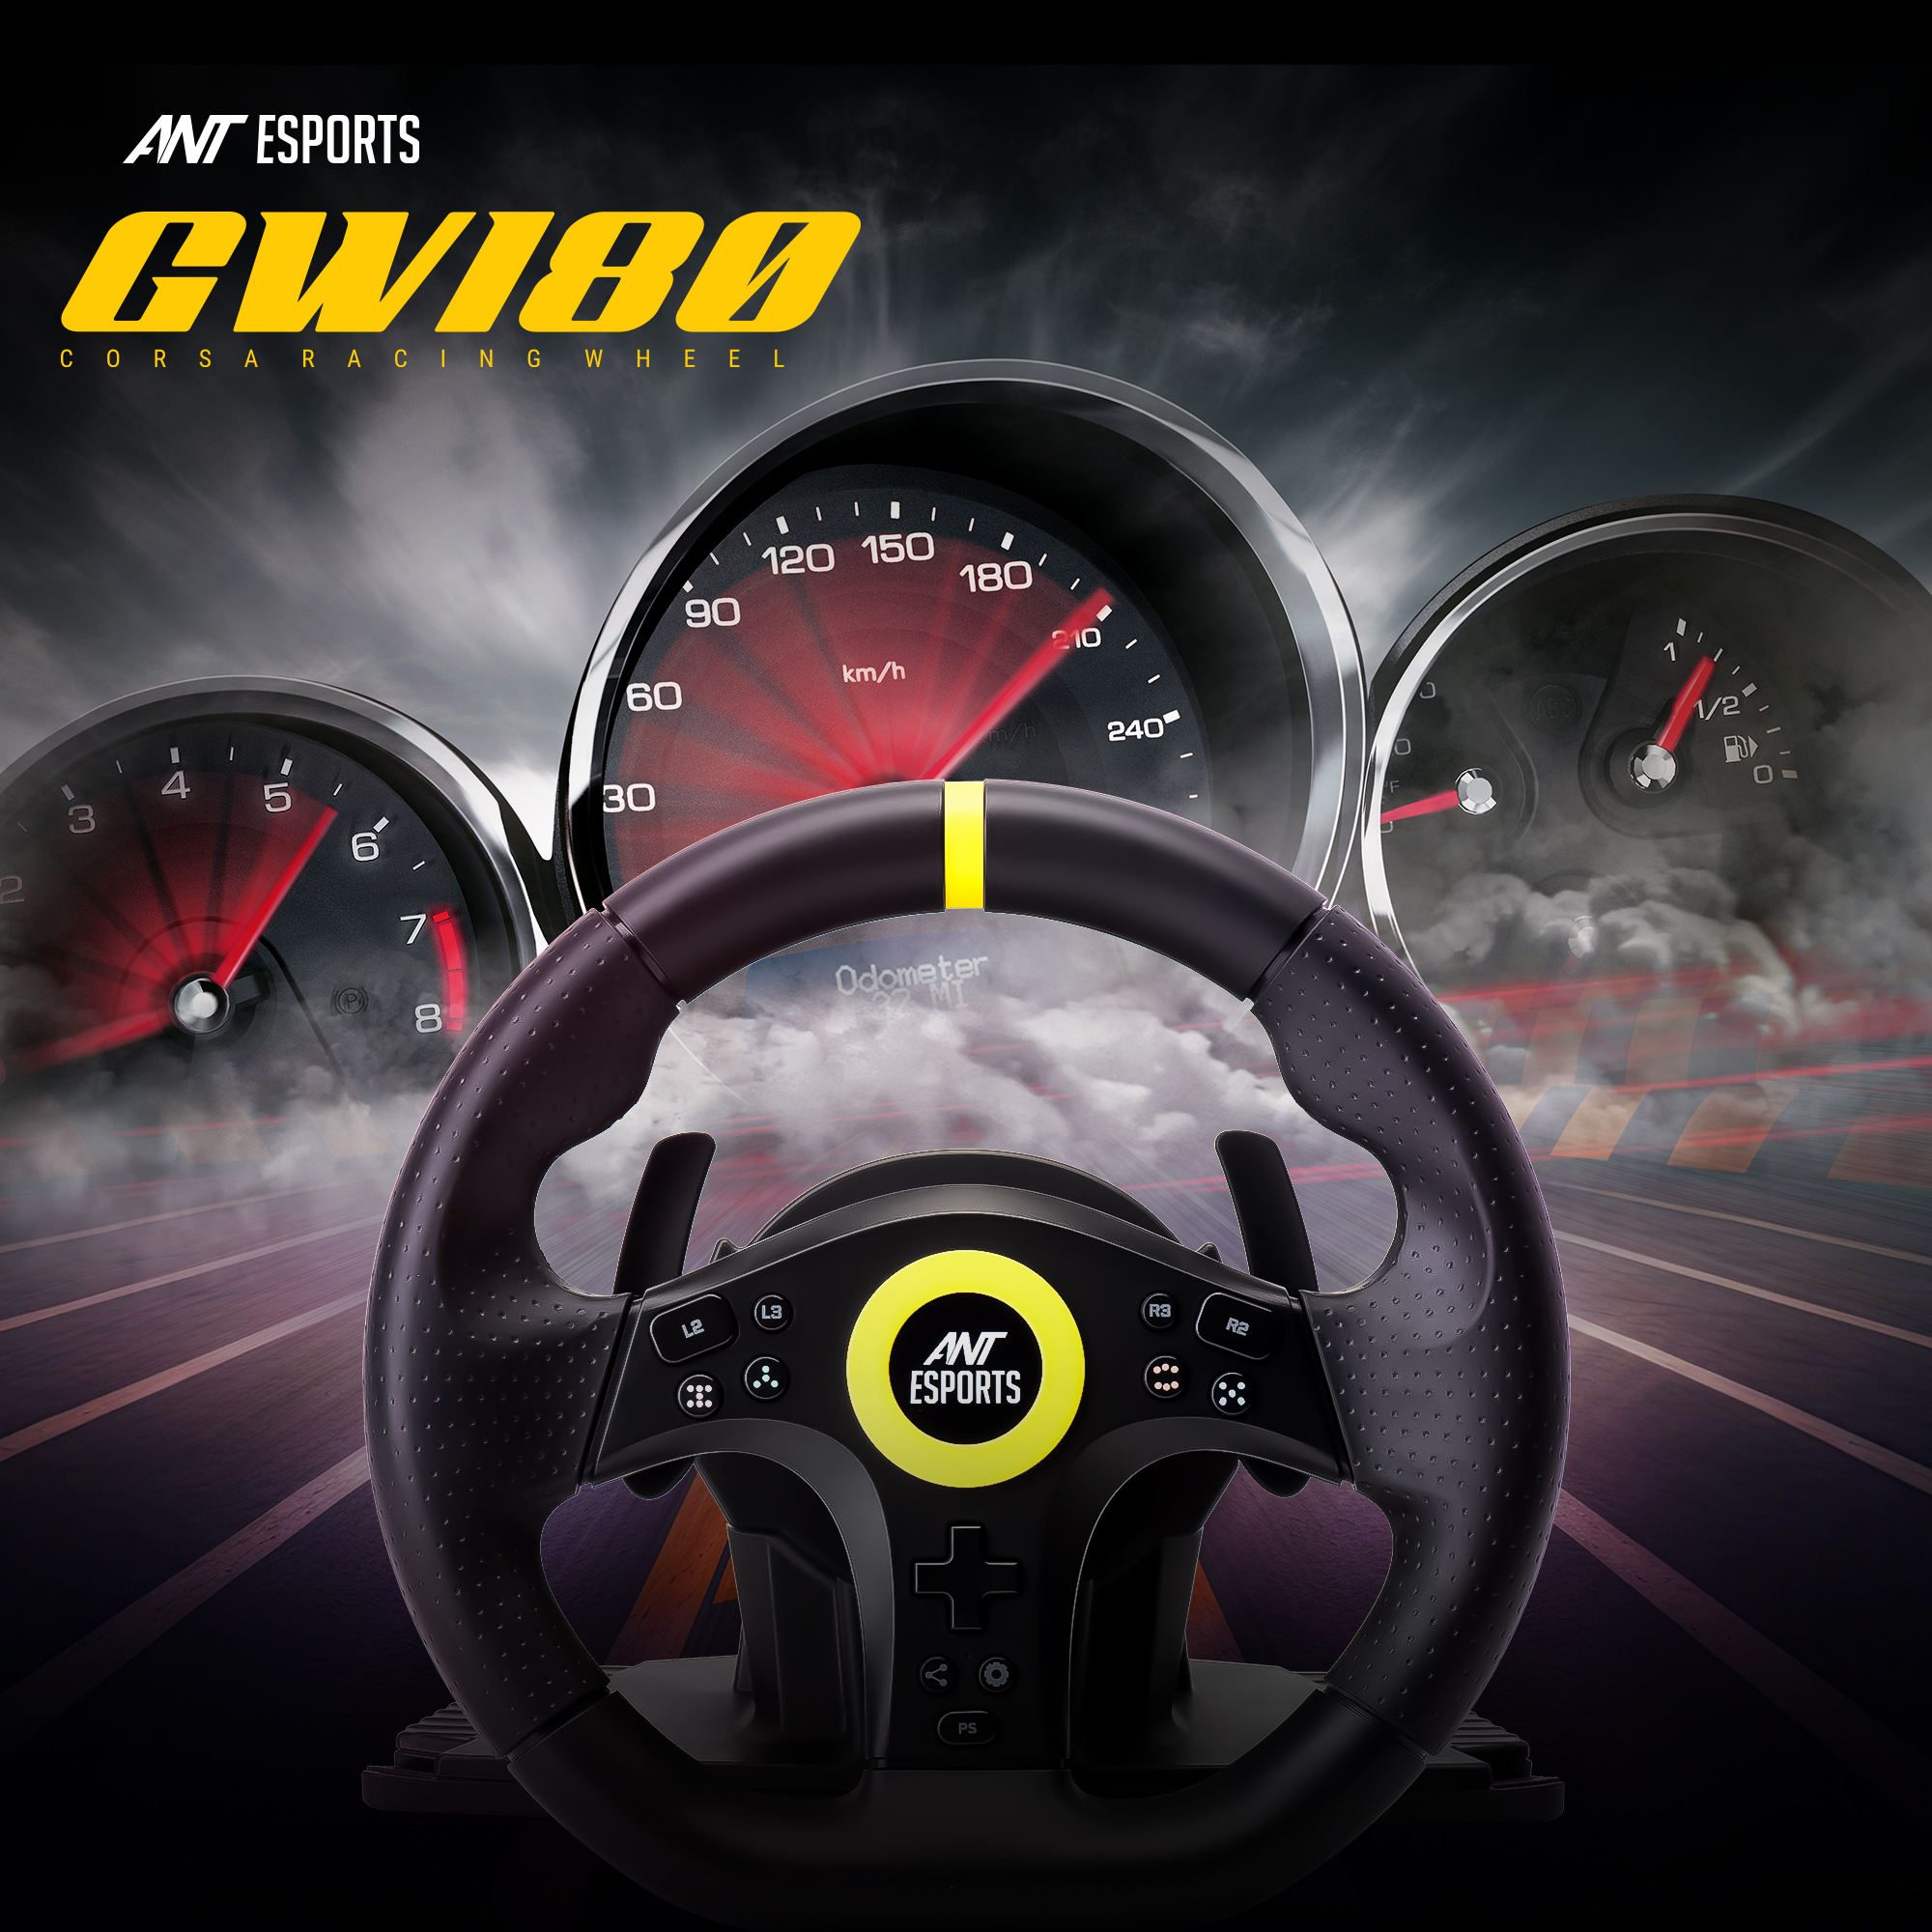 Ant Esports GW180 Corsa Racing Wheel & Pedal Set - ANT E-SPORTS